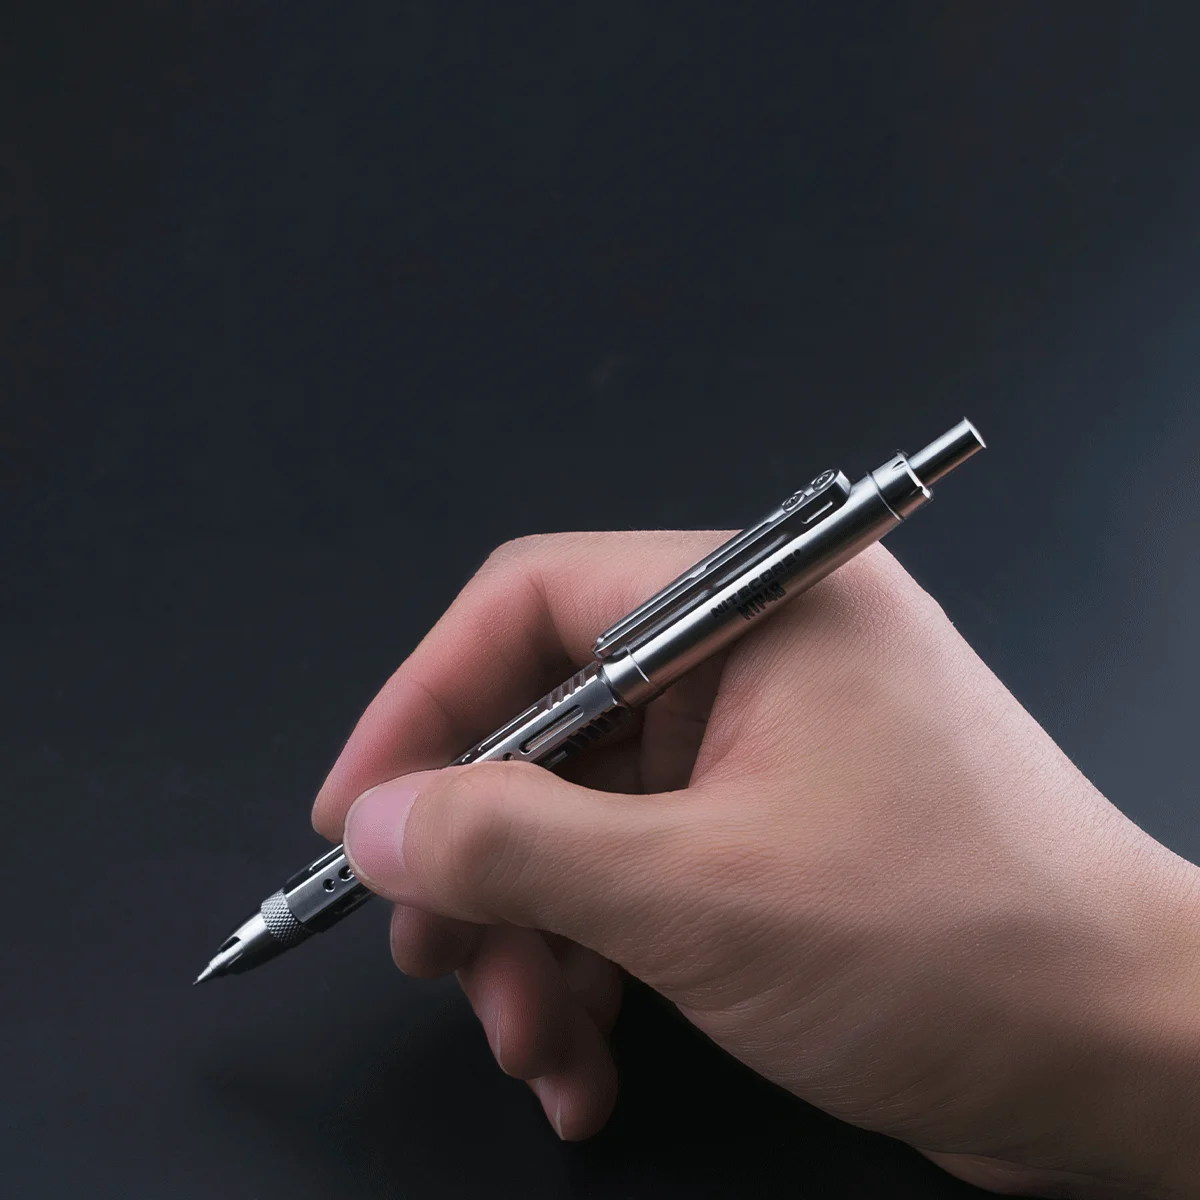 

Nitecore NTP48 Exceptional Sketch Titanium Alloy Mechanical Pencil Self-defense Titanium Alloy Tool Writing Cartooning